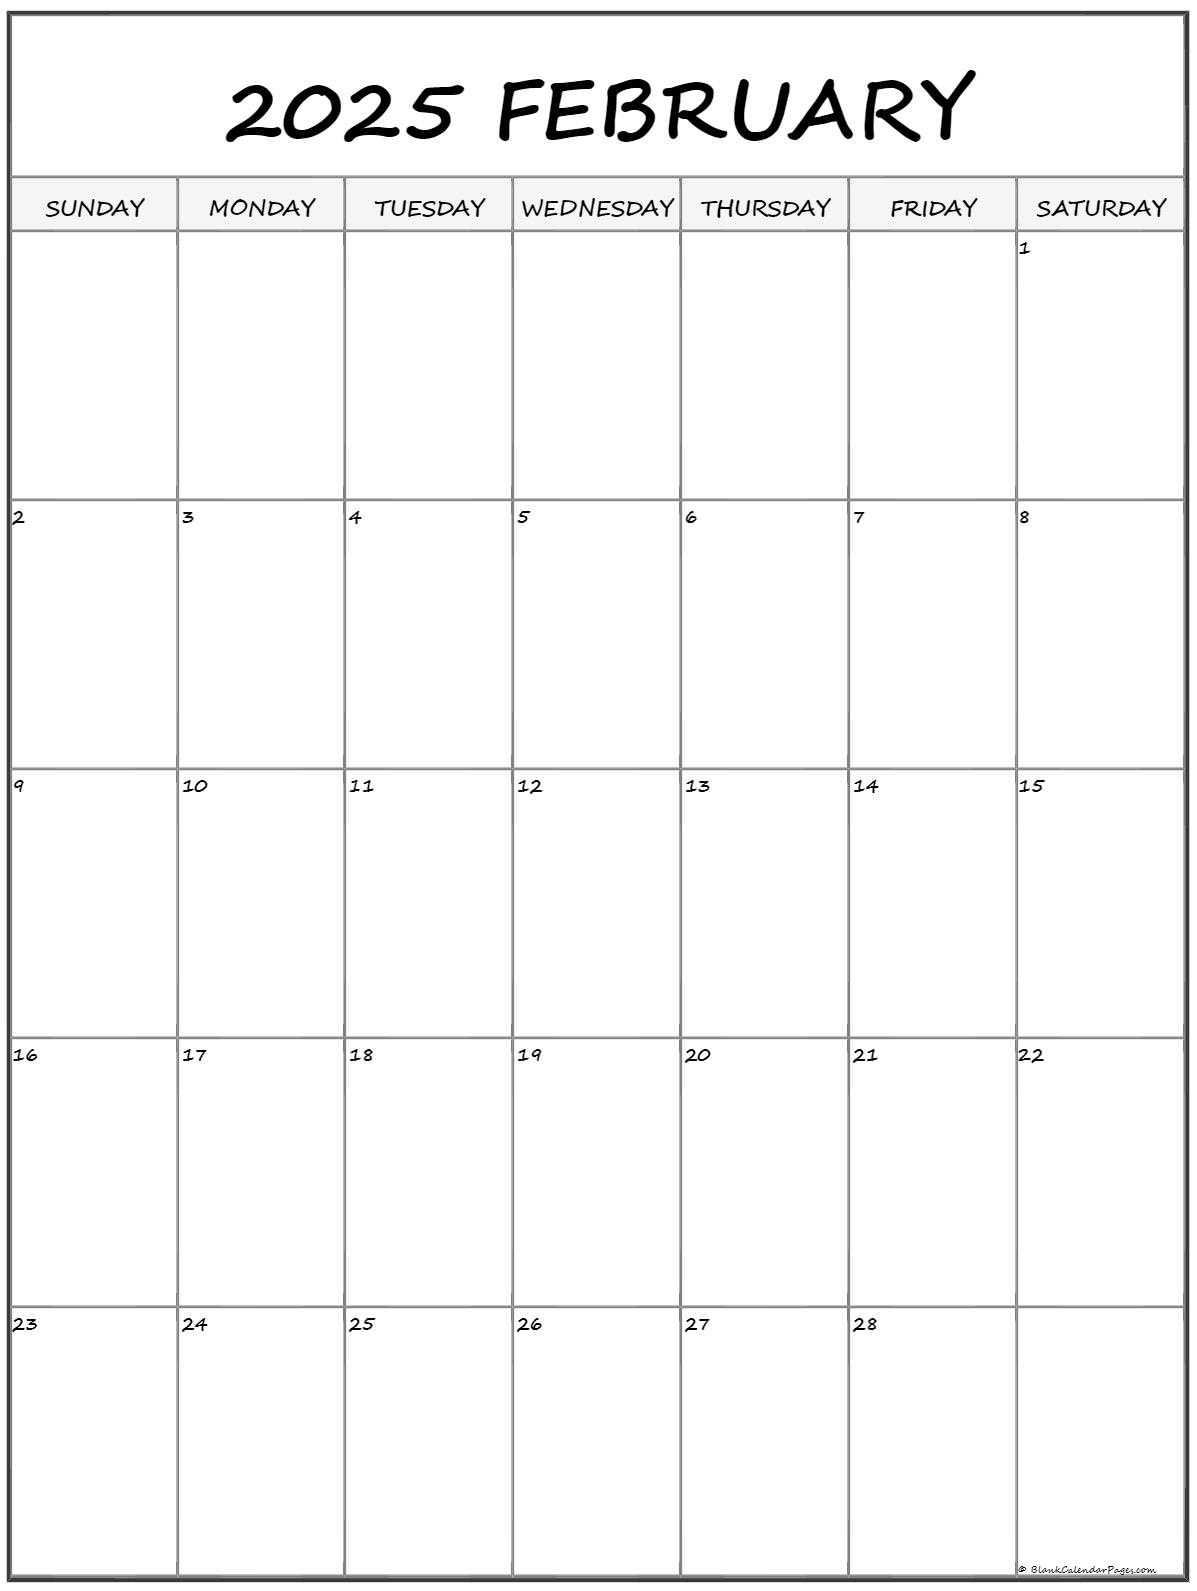 February 2025 Vertical Calendar Portrait